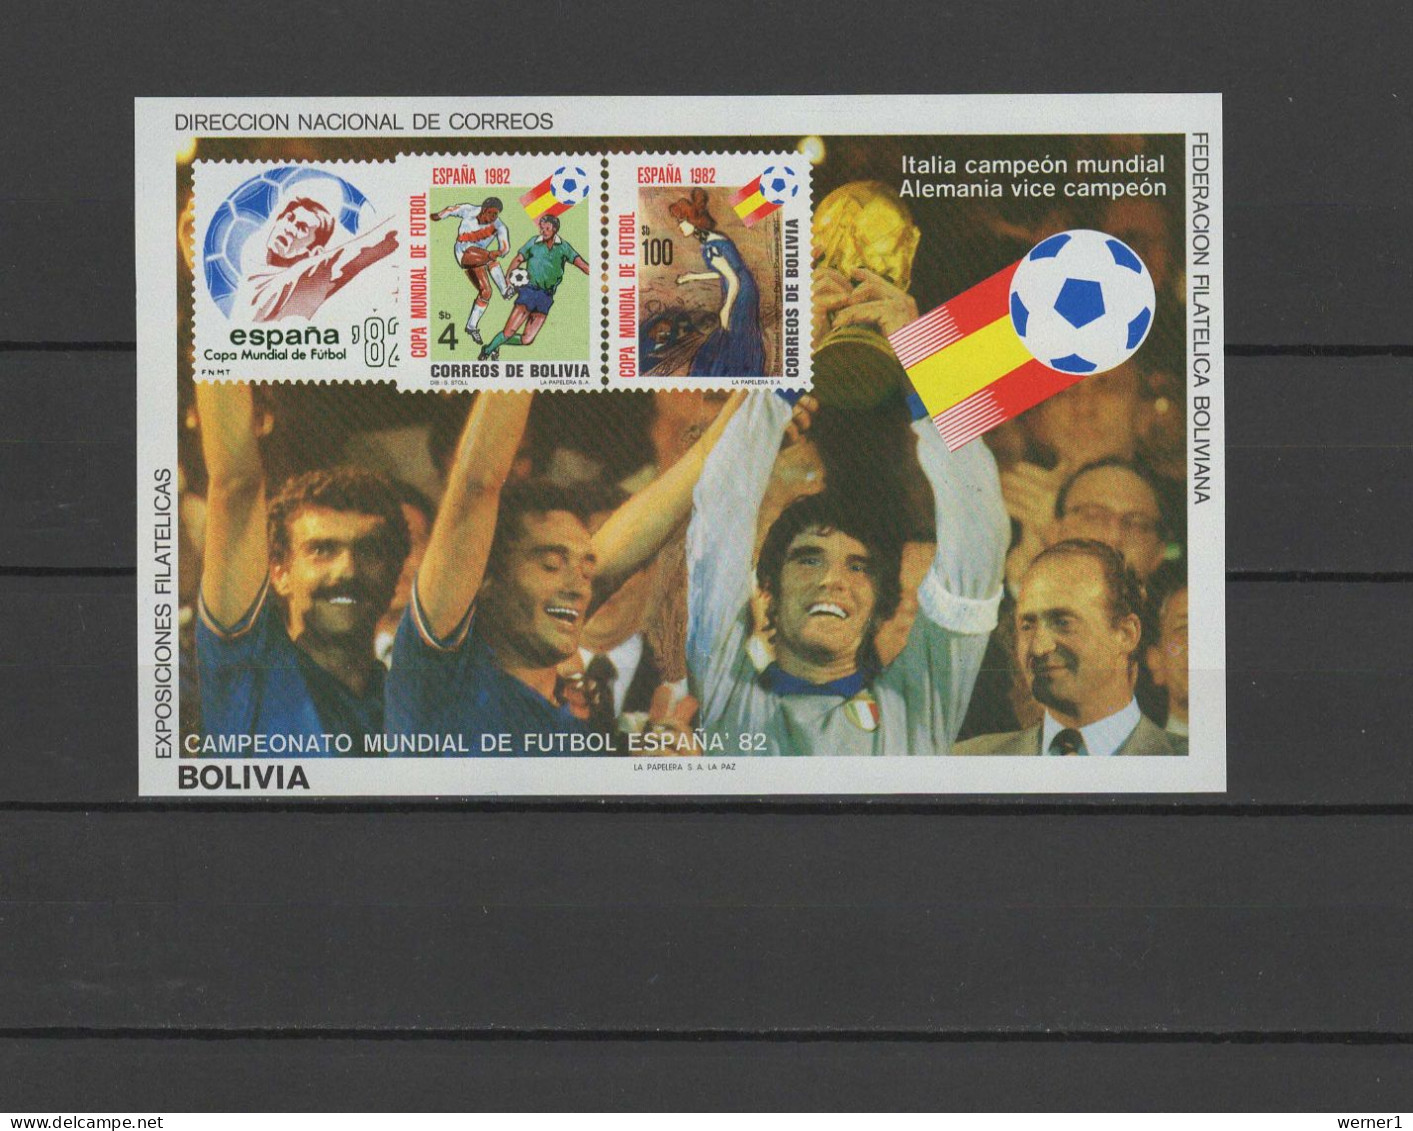 Bolivia 1982 Football Soccer World Cup S/s MNH -scarce- - 1982 – Spain